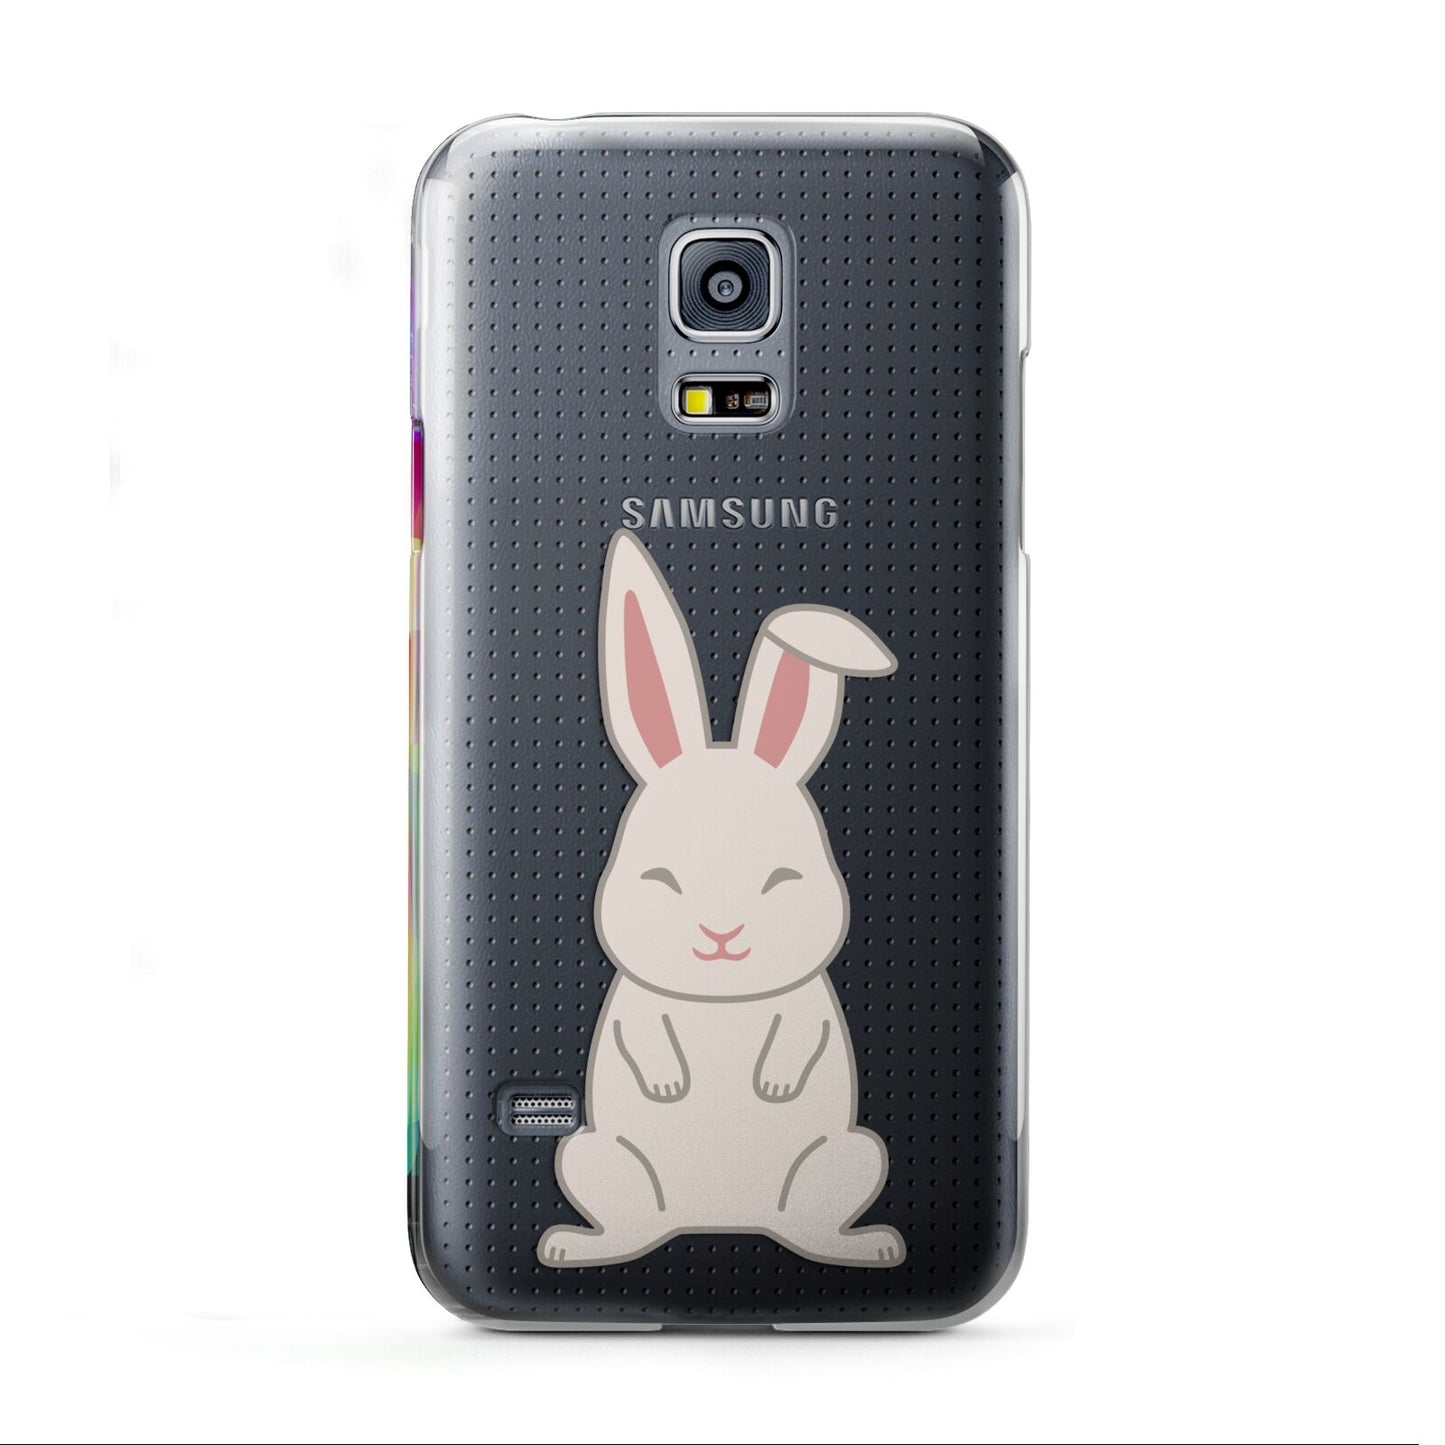 Bunny Samsung Galaxy S5 Mini Case